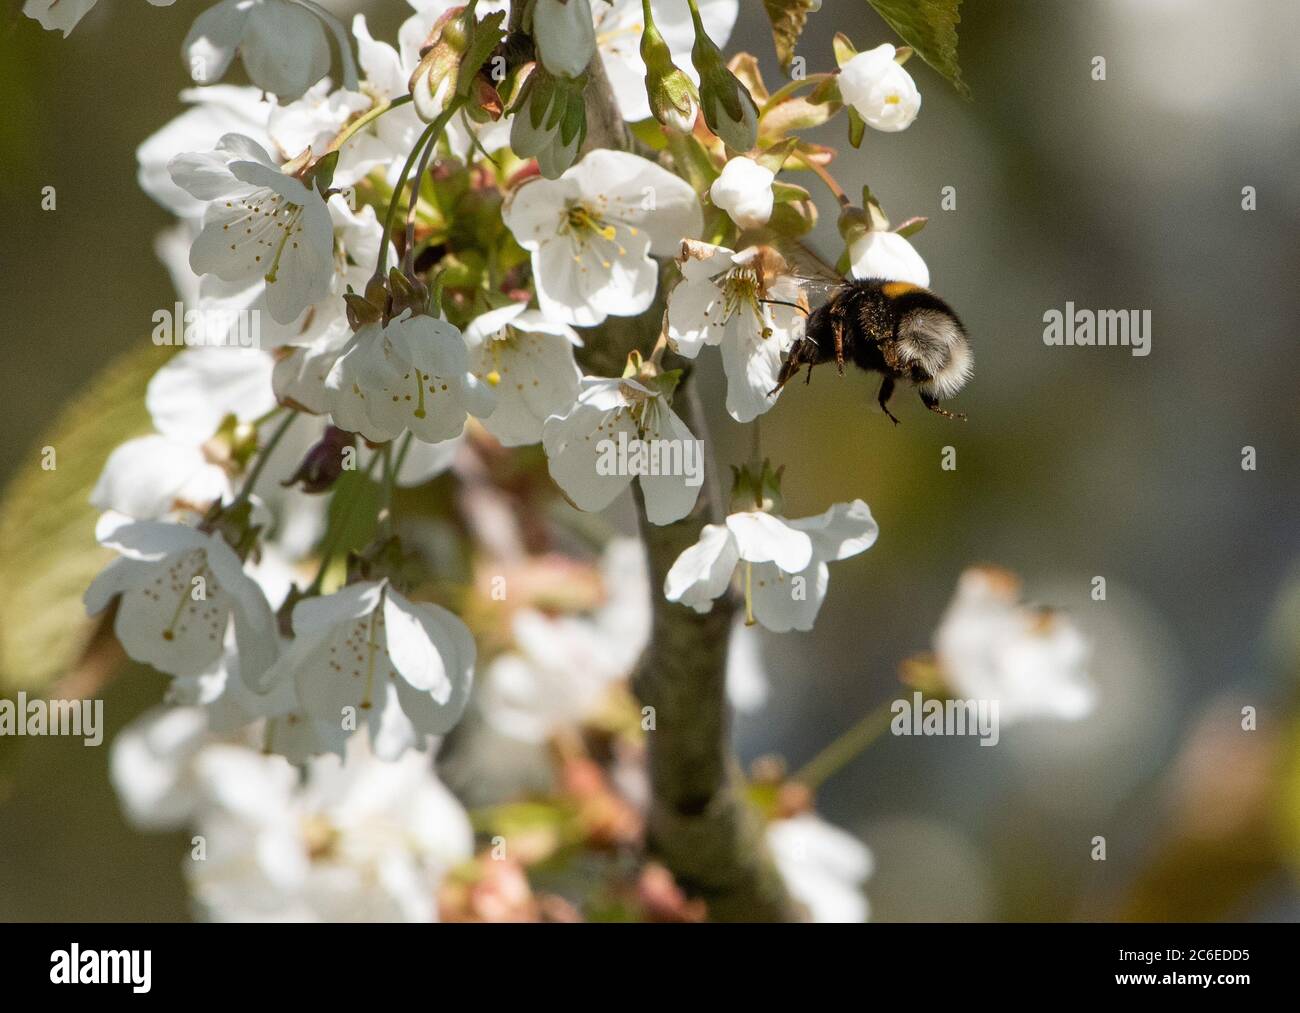 Bumblebee and Wild cherry blossom, Chipping, Preston, Lancashire, UK Stock Photo